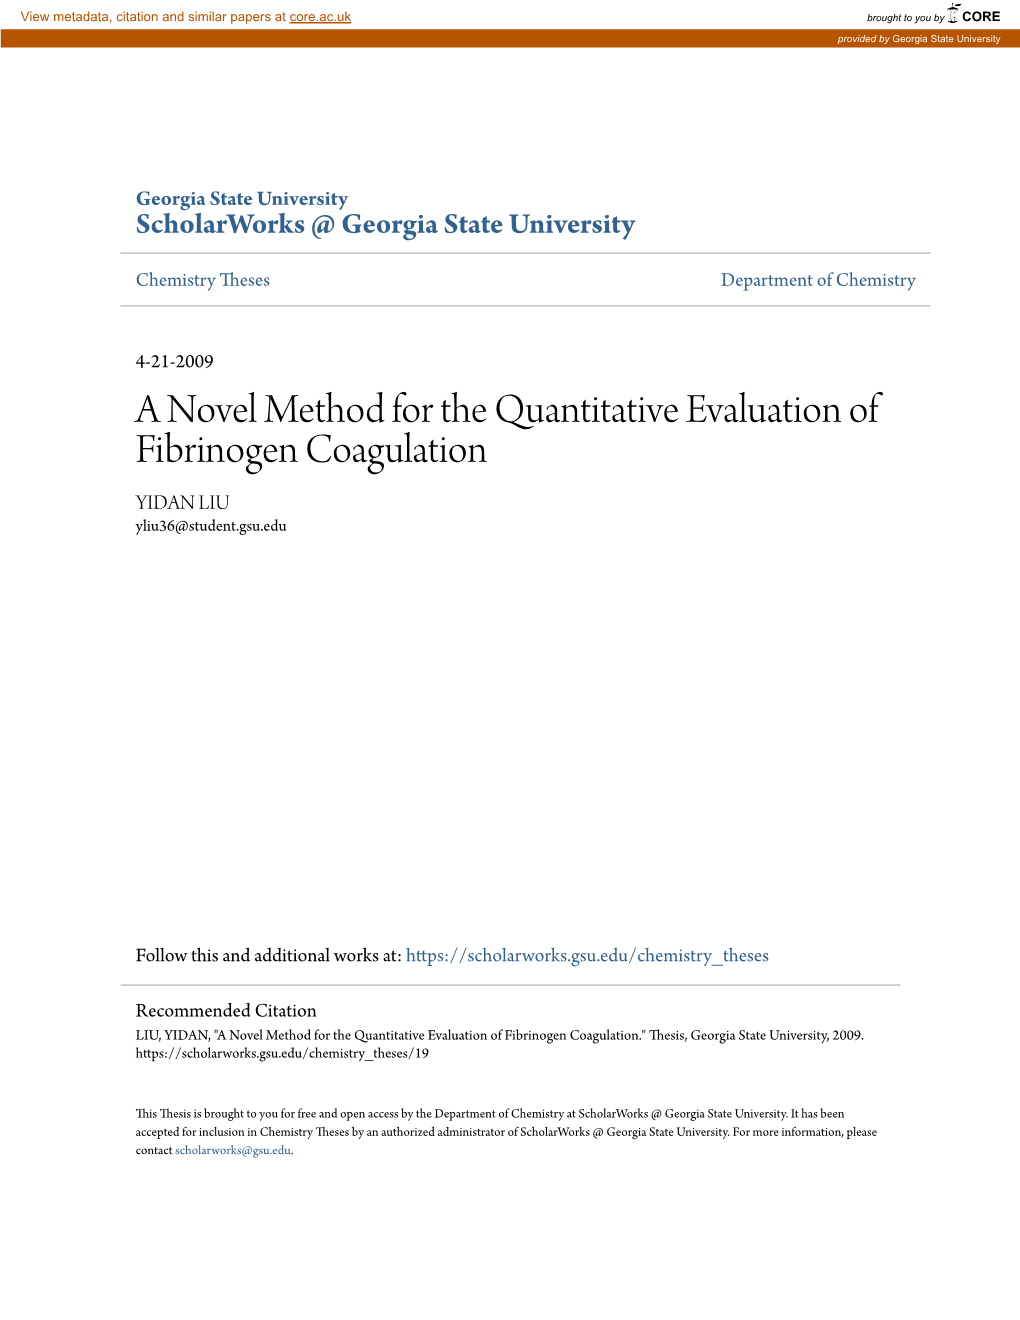 A Novel Method for the Quantitative Evaluation of Fibrinogen Coagulation YIDAN LIU Yliu36@Student.Gsu.Edu